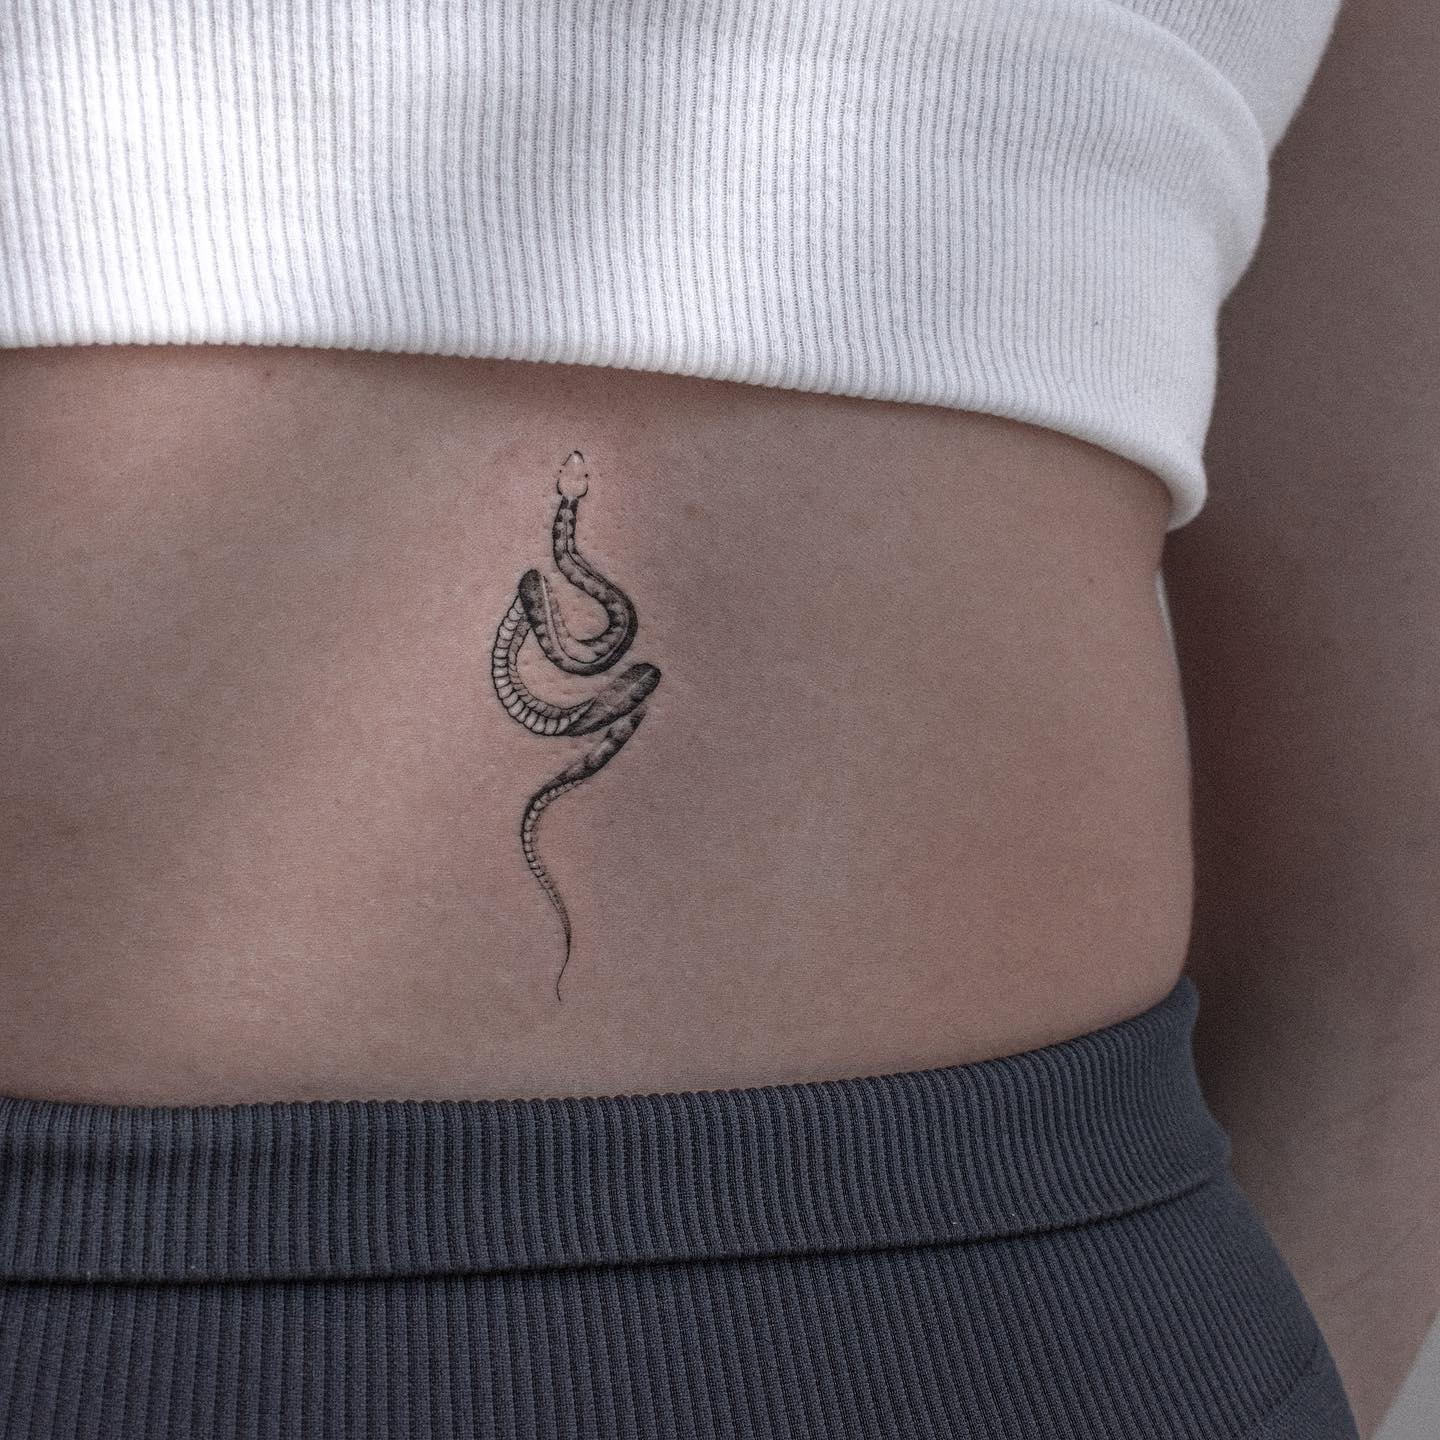 Back Tattoos For Women